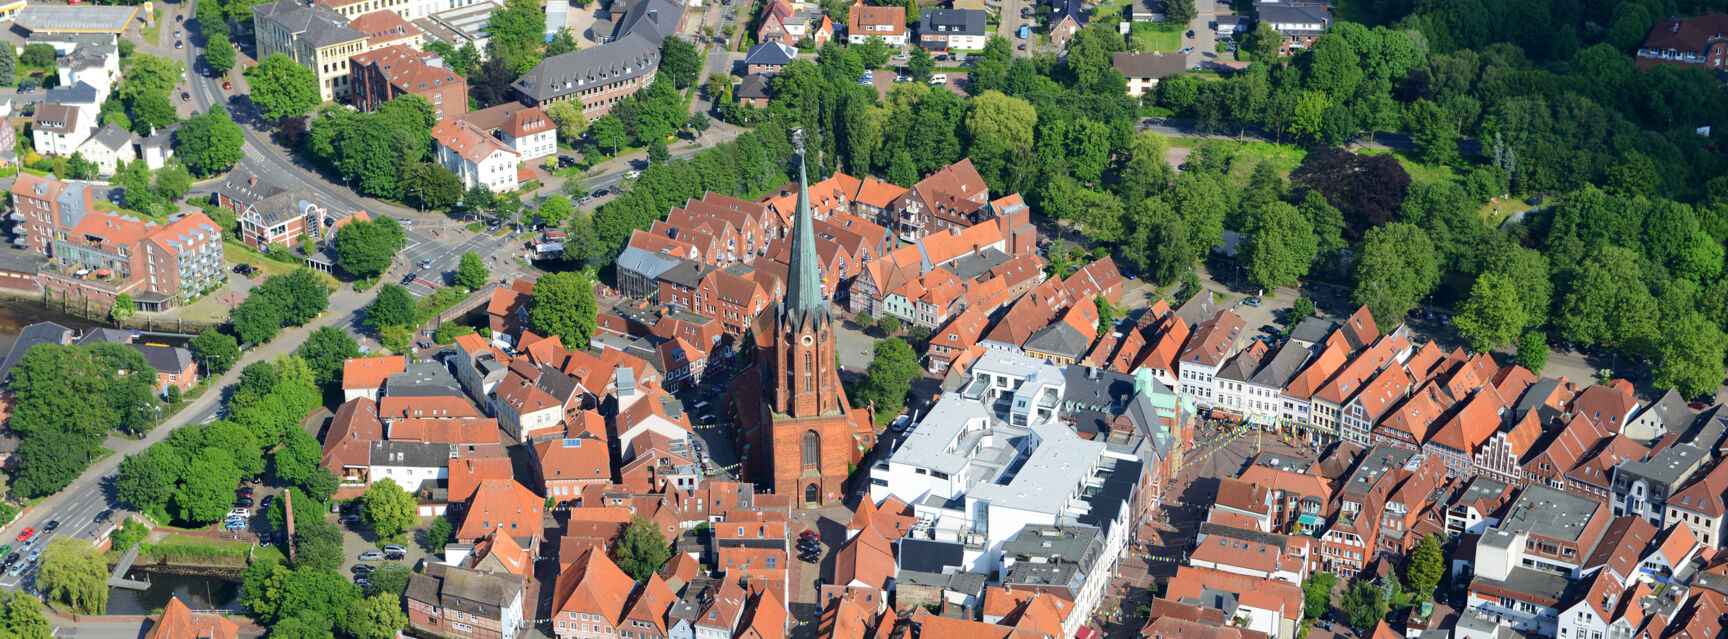 Luftbild Buxtehude Altstadt ©Martin Elsen, Hansestadt Buxtehude